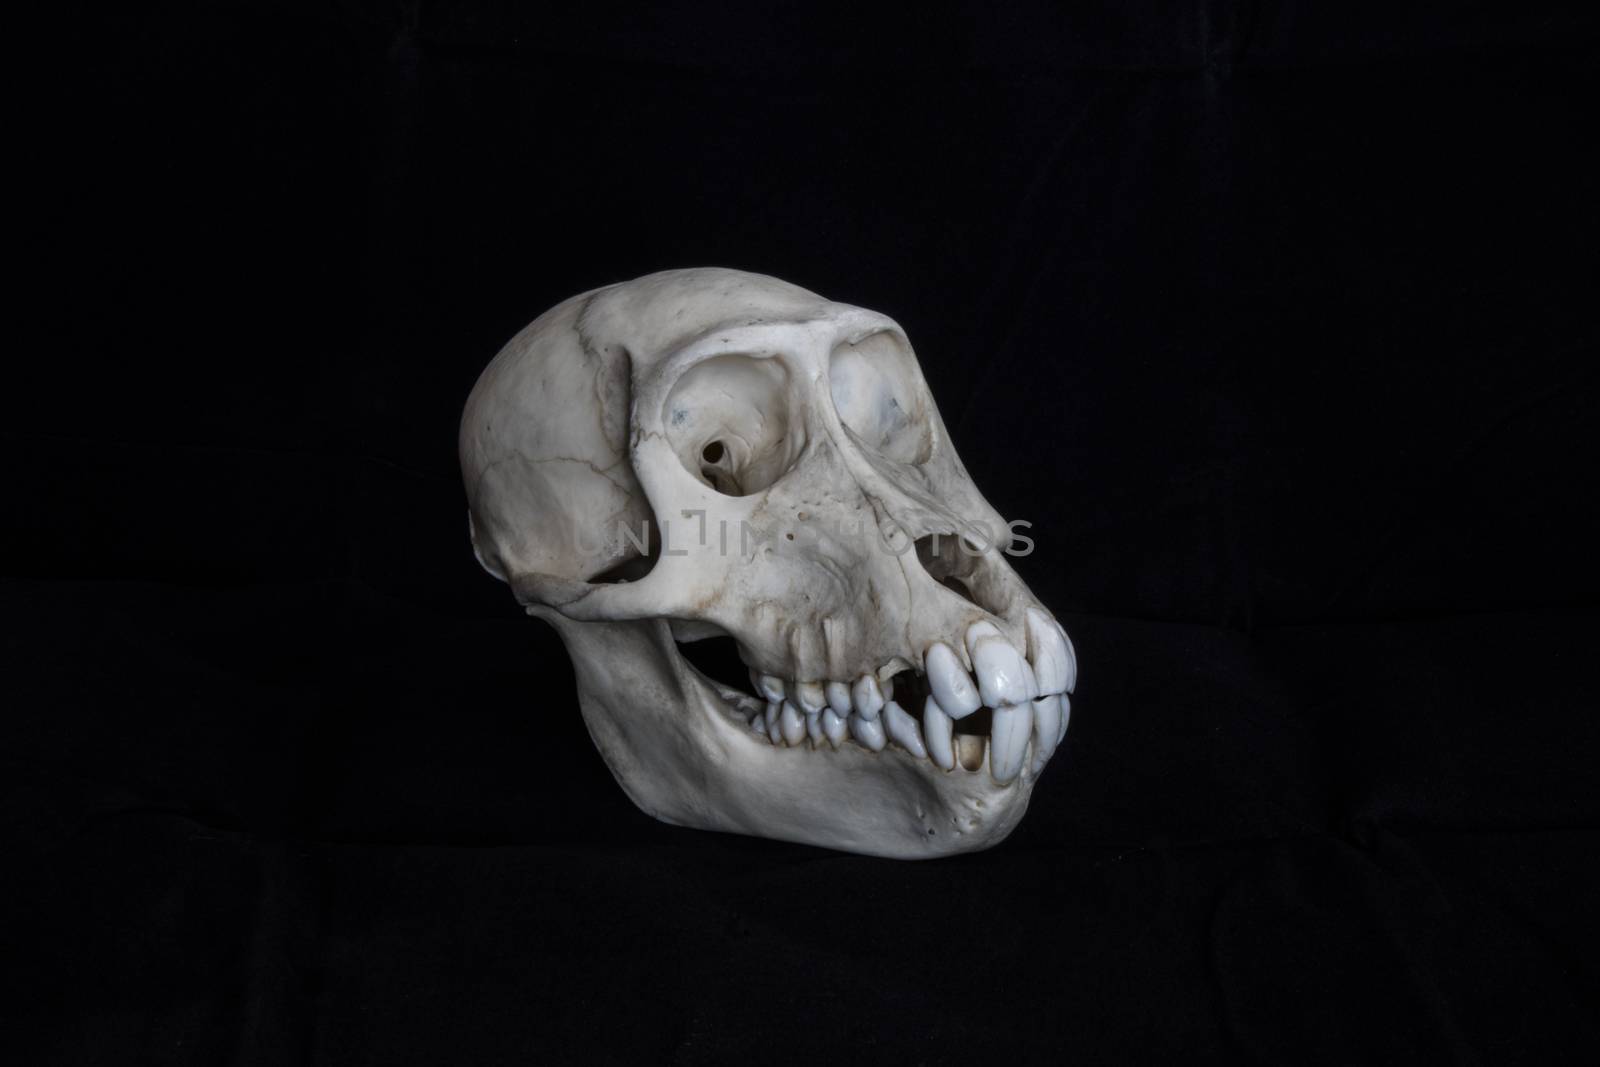 Monkey skull complete black background side view by bluiten